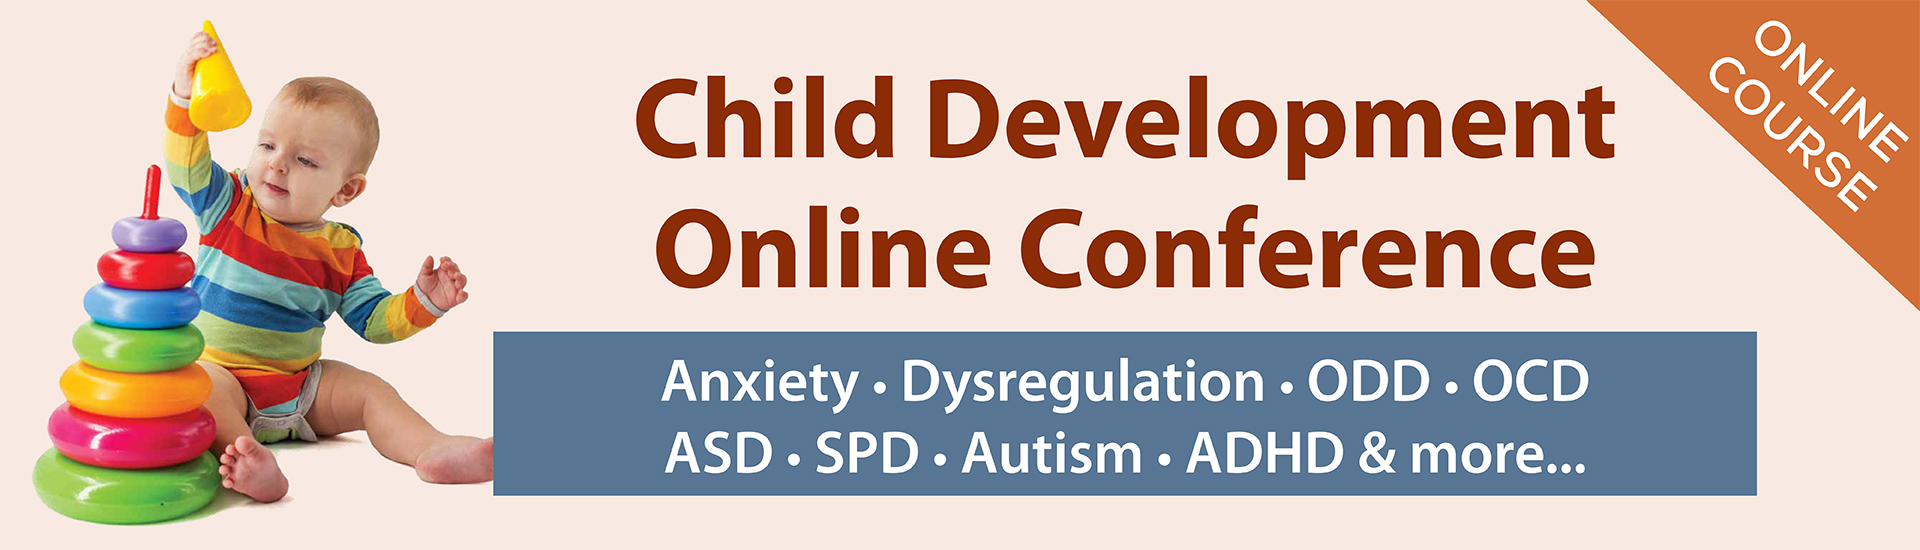 Child Development Online Conference